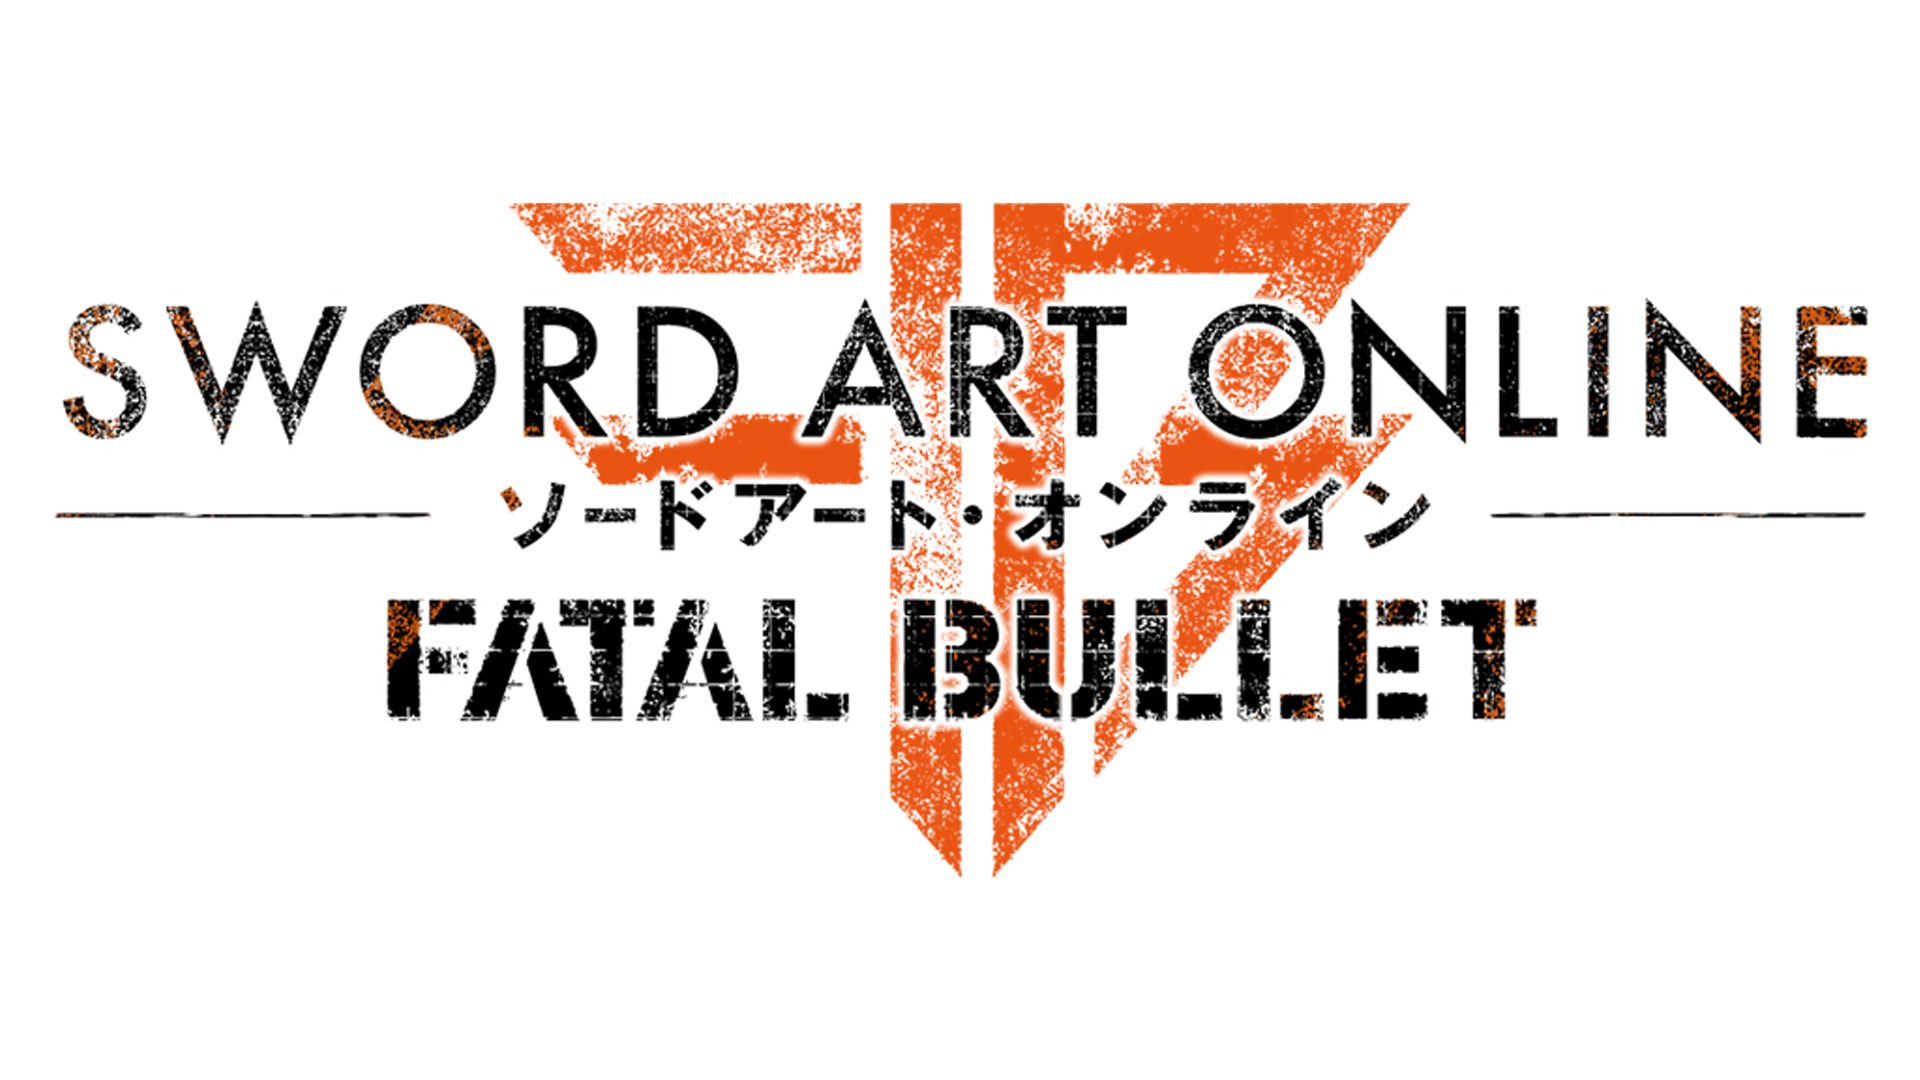 Sword Art Online: Fatal Bullet Logo